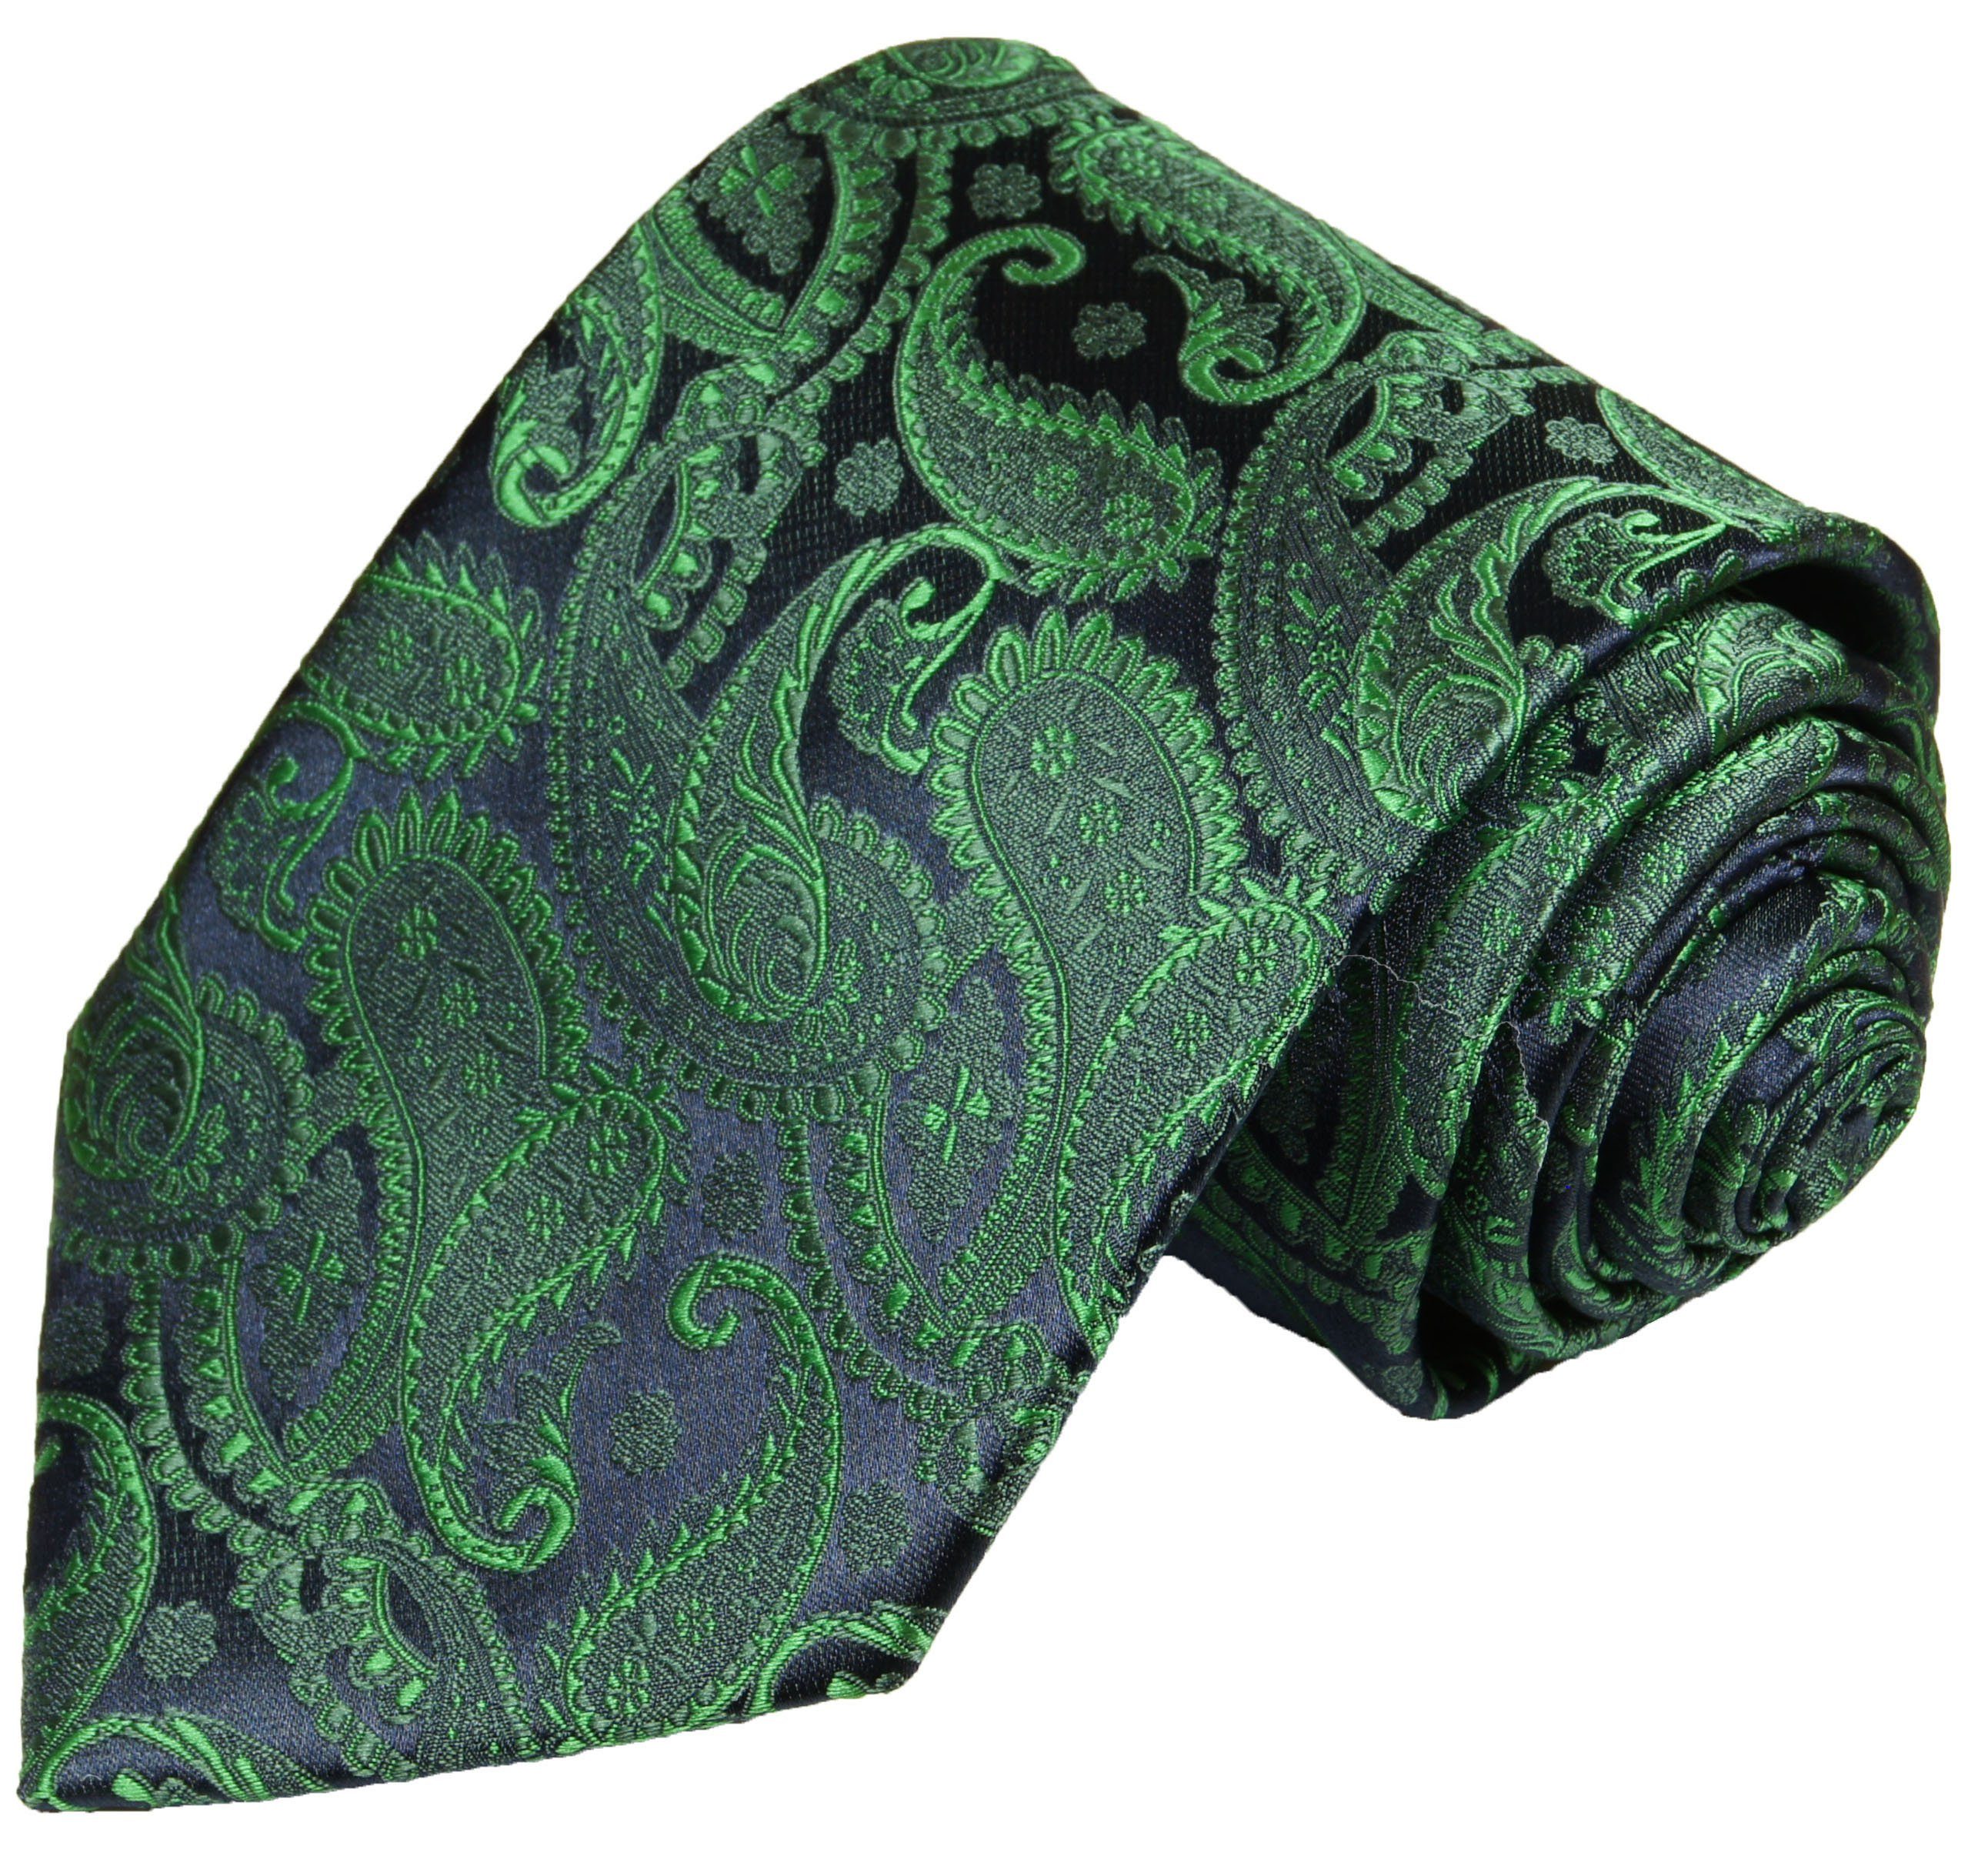 Bräutigam Krawatte Paul paisley Mikrofaser Schmal (6cm), Malone - grün Hochzeitskrawatte V14 - Herren